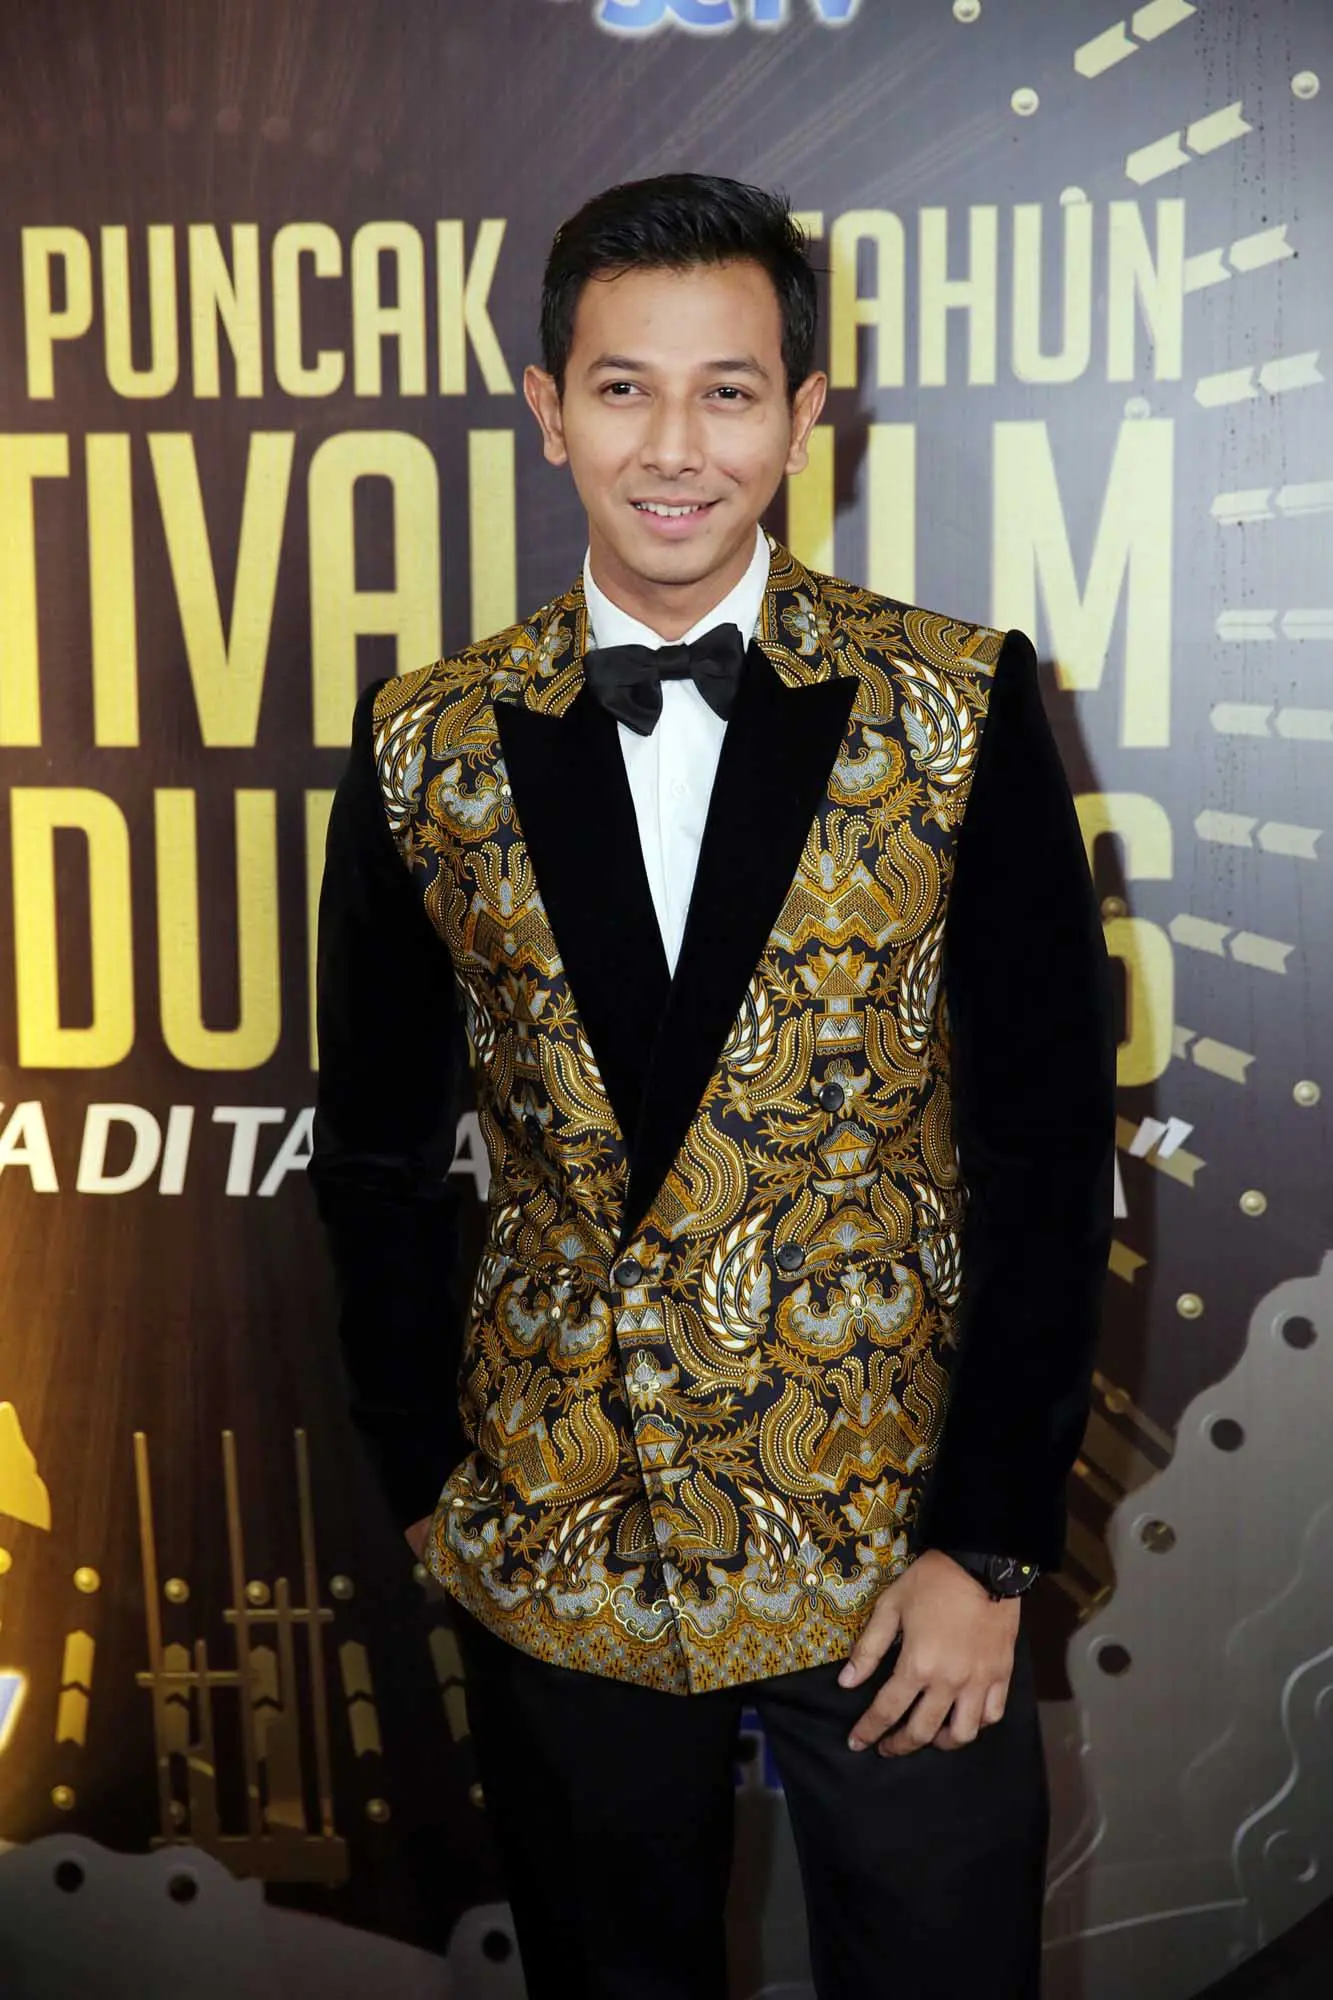 Festival Film Bandung 2016 (Deki Prayoga/bintang.com)